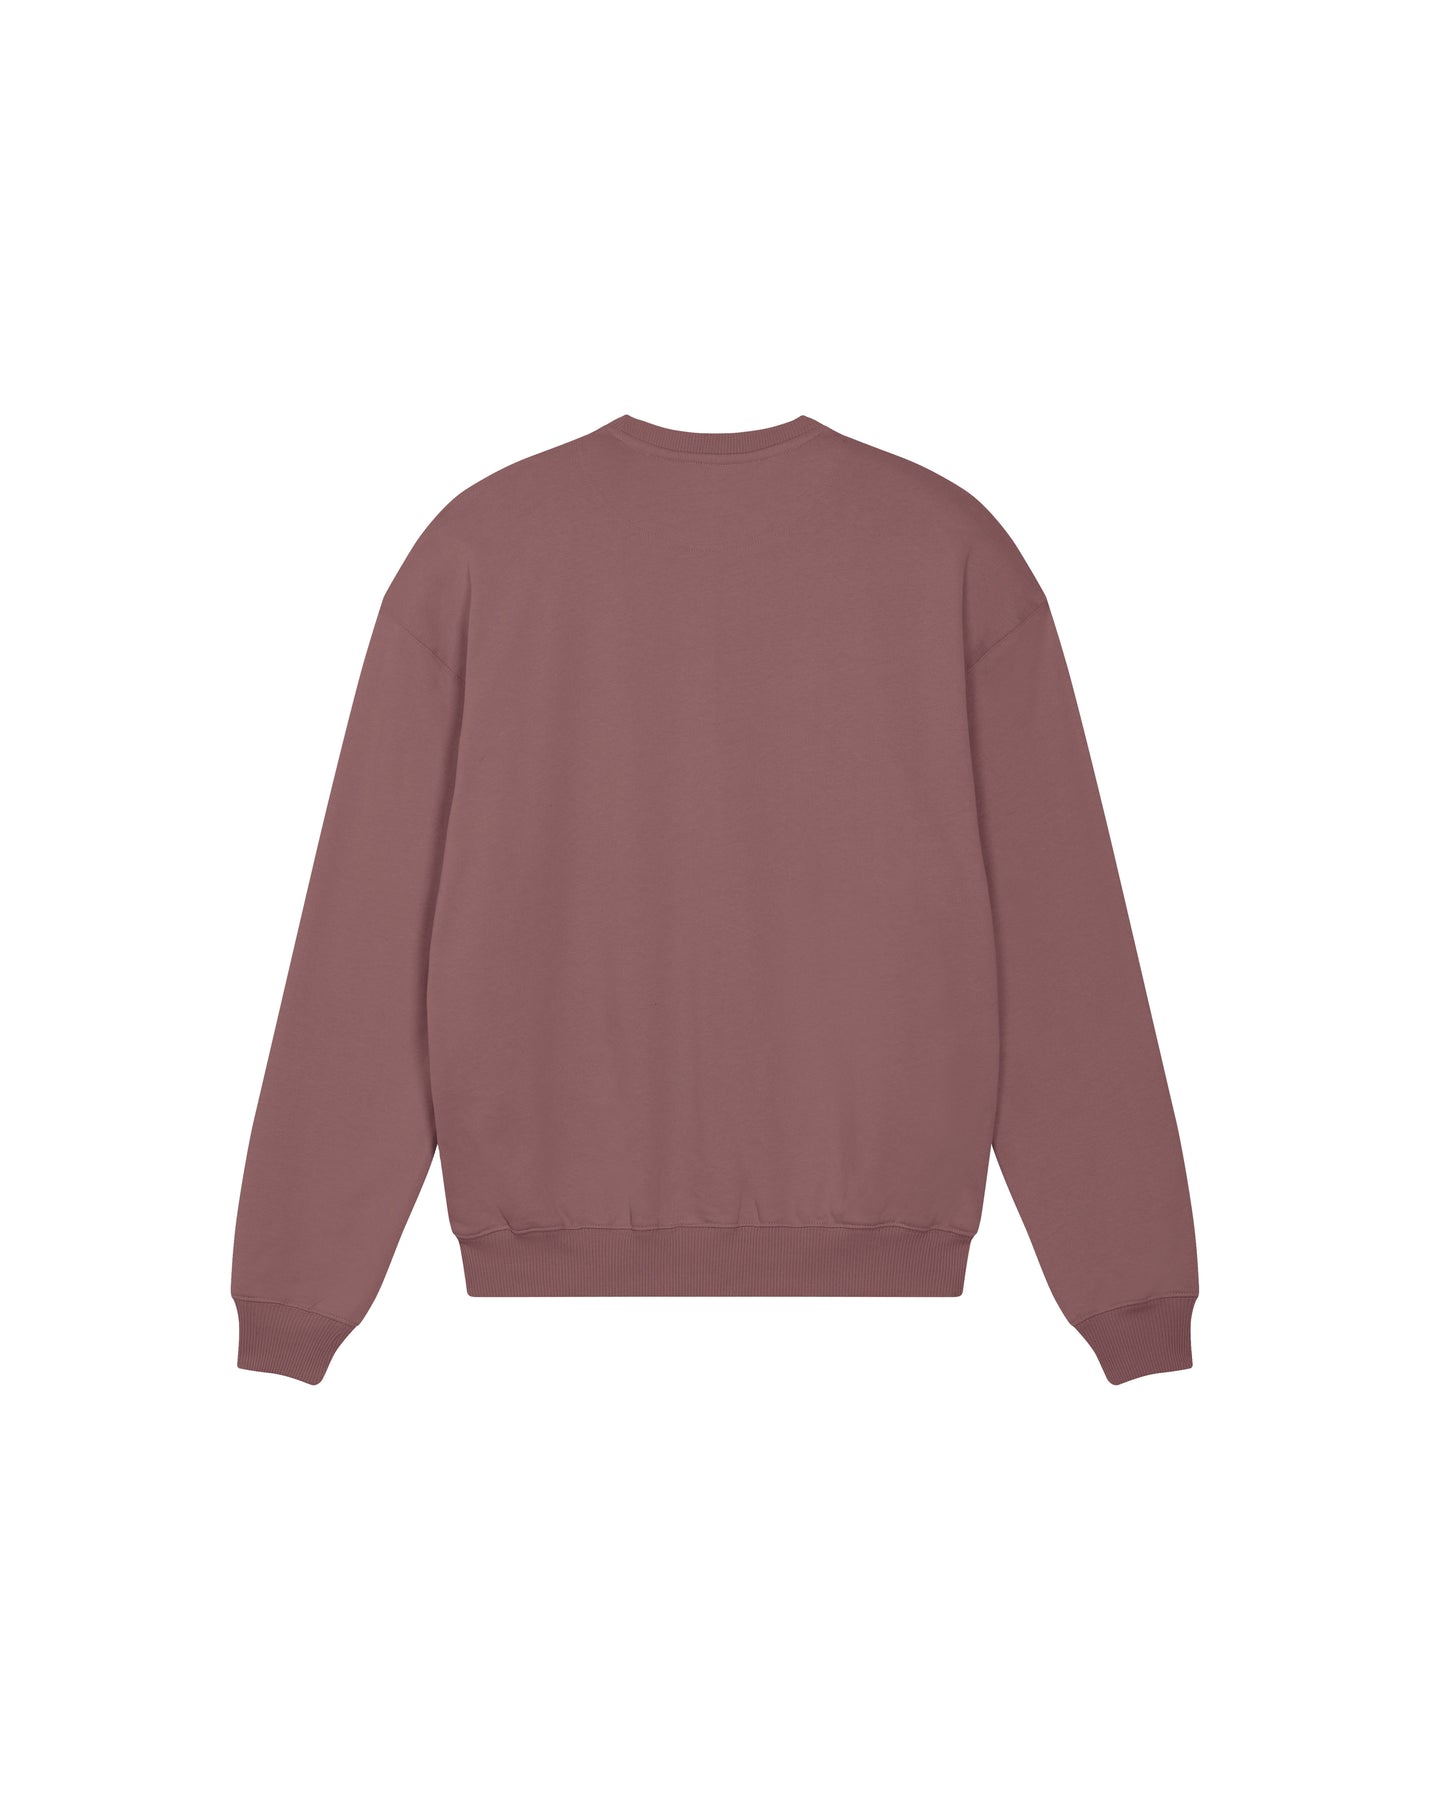 
                  
                    AL Contour Sweater - Mocha Brown
                  
                